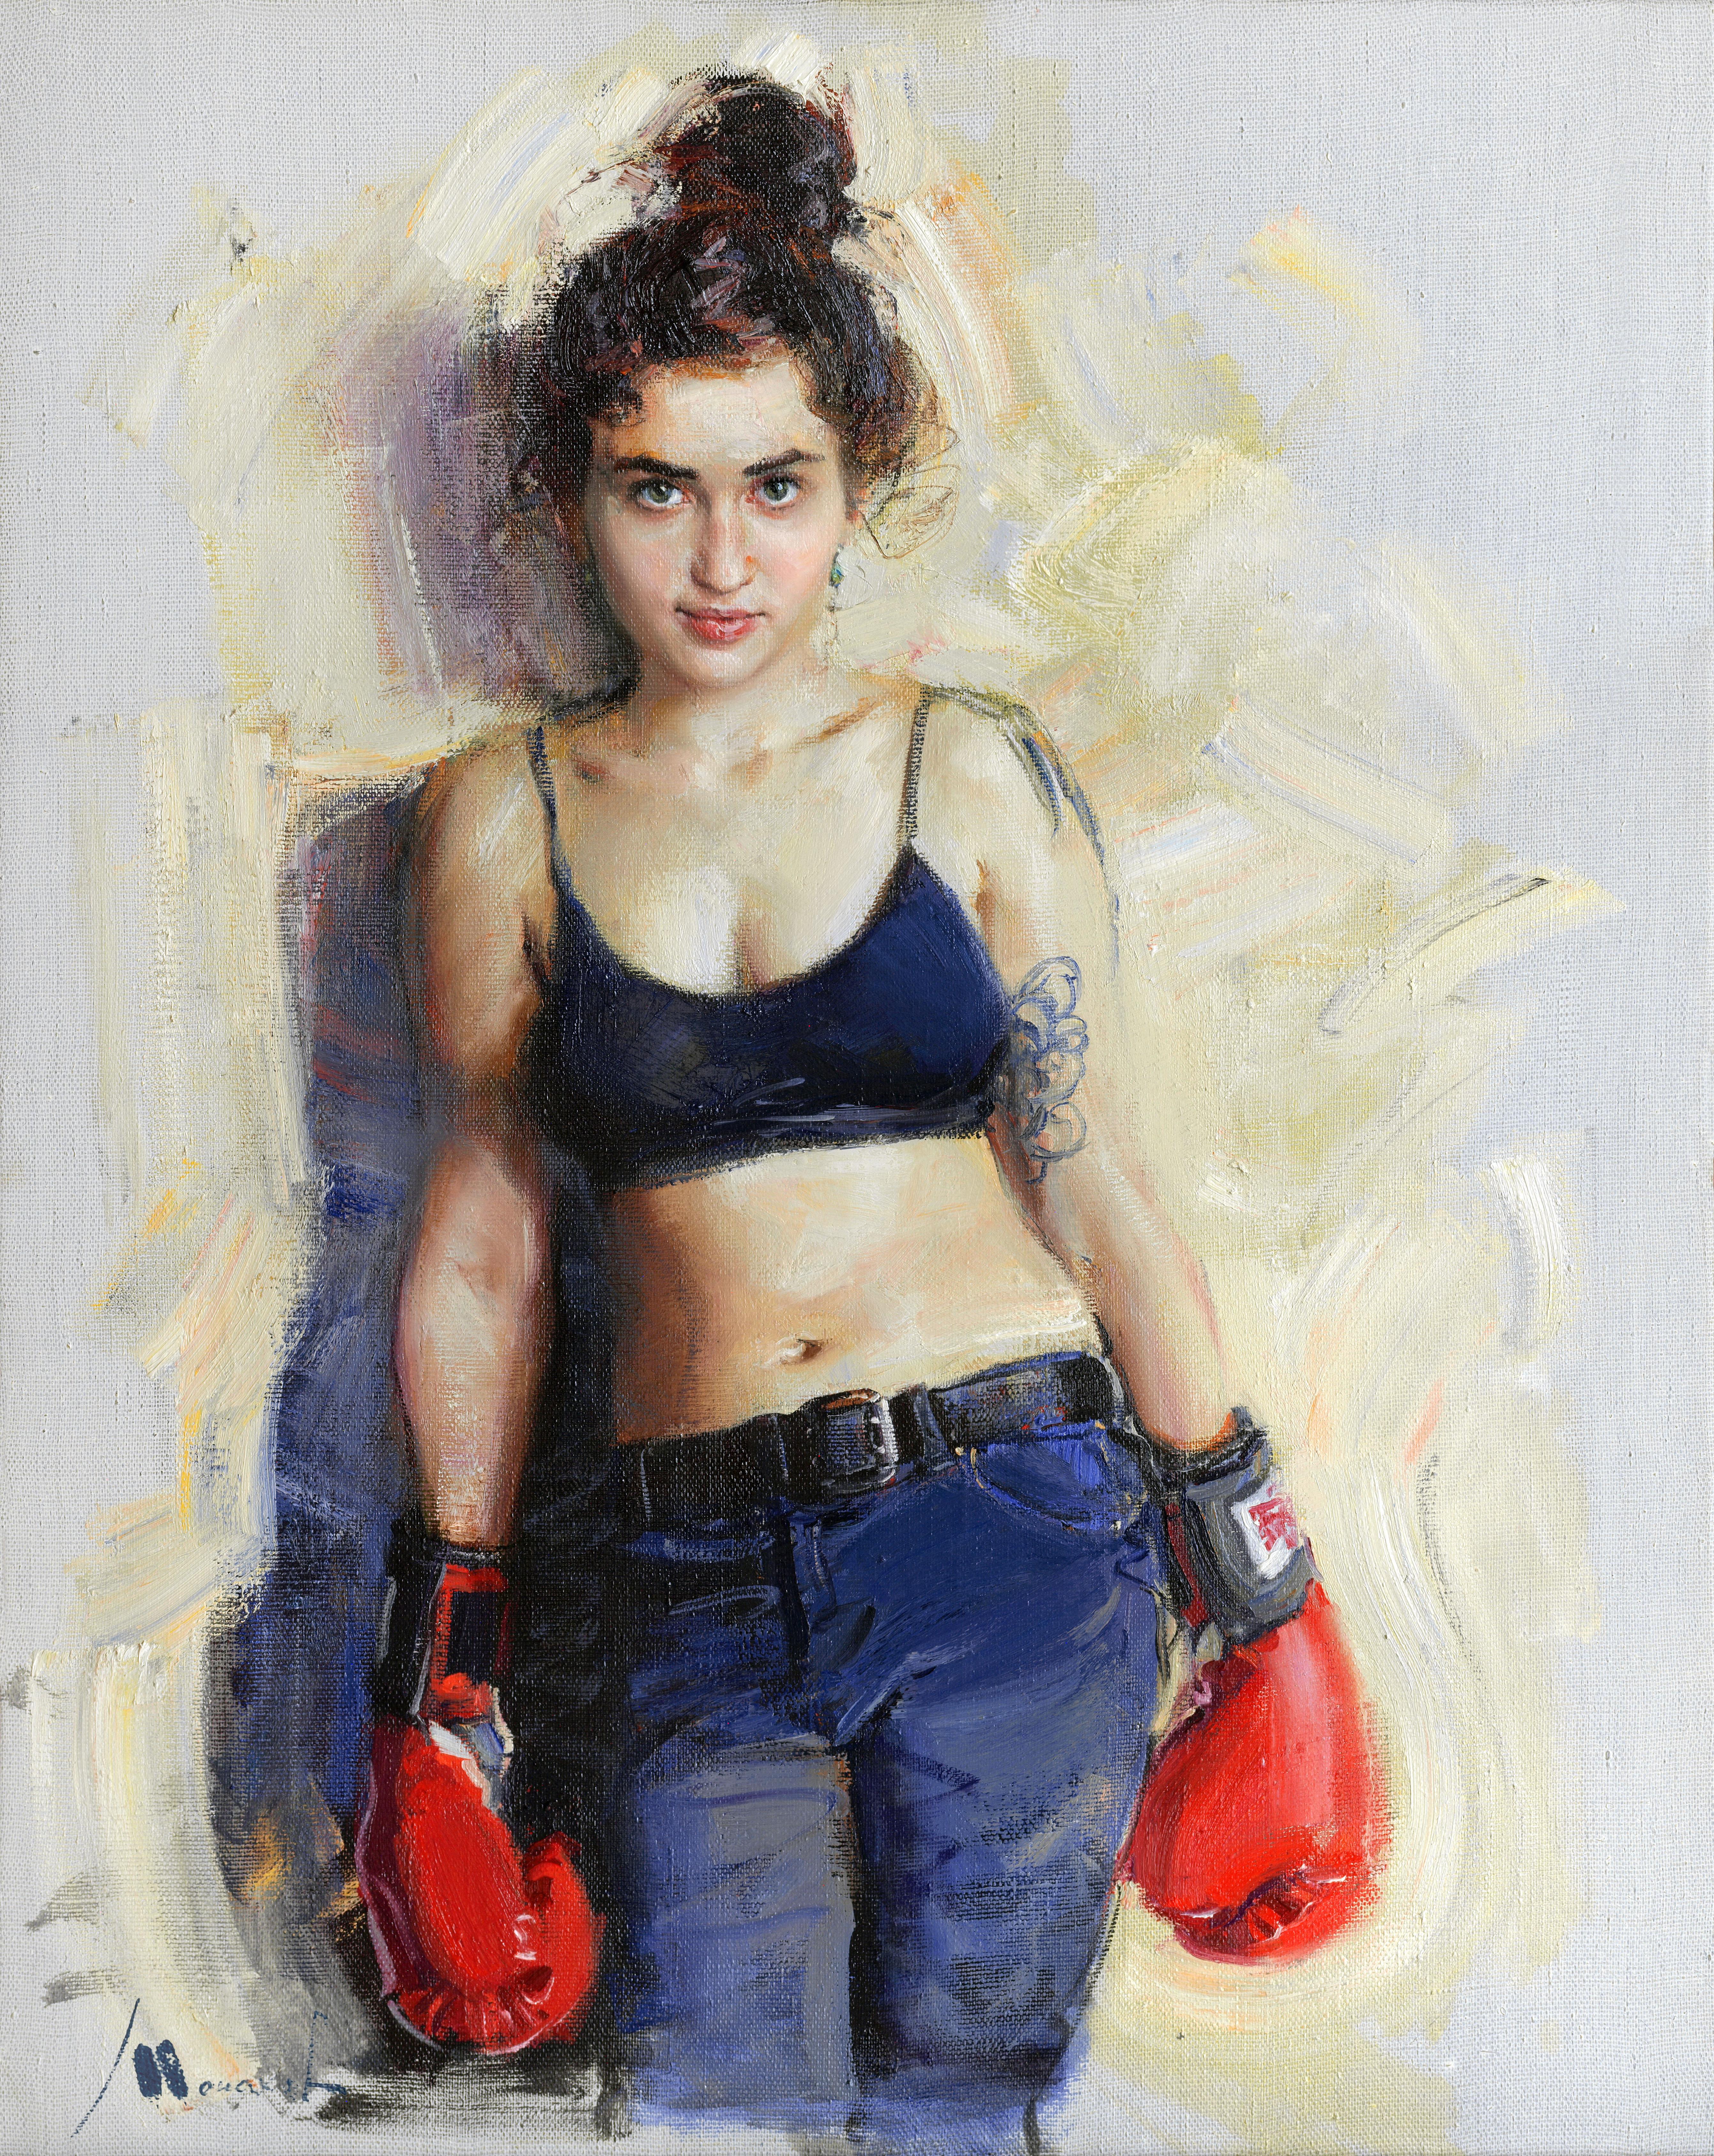 Evgeniy Monahov Figurative Painting - The boxer girl